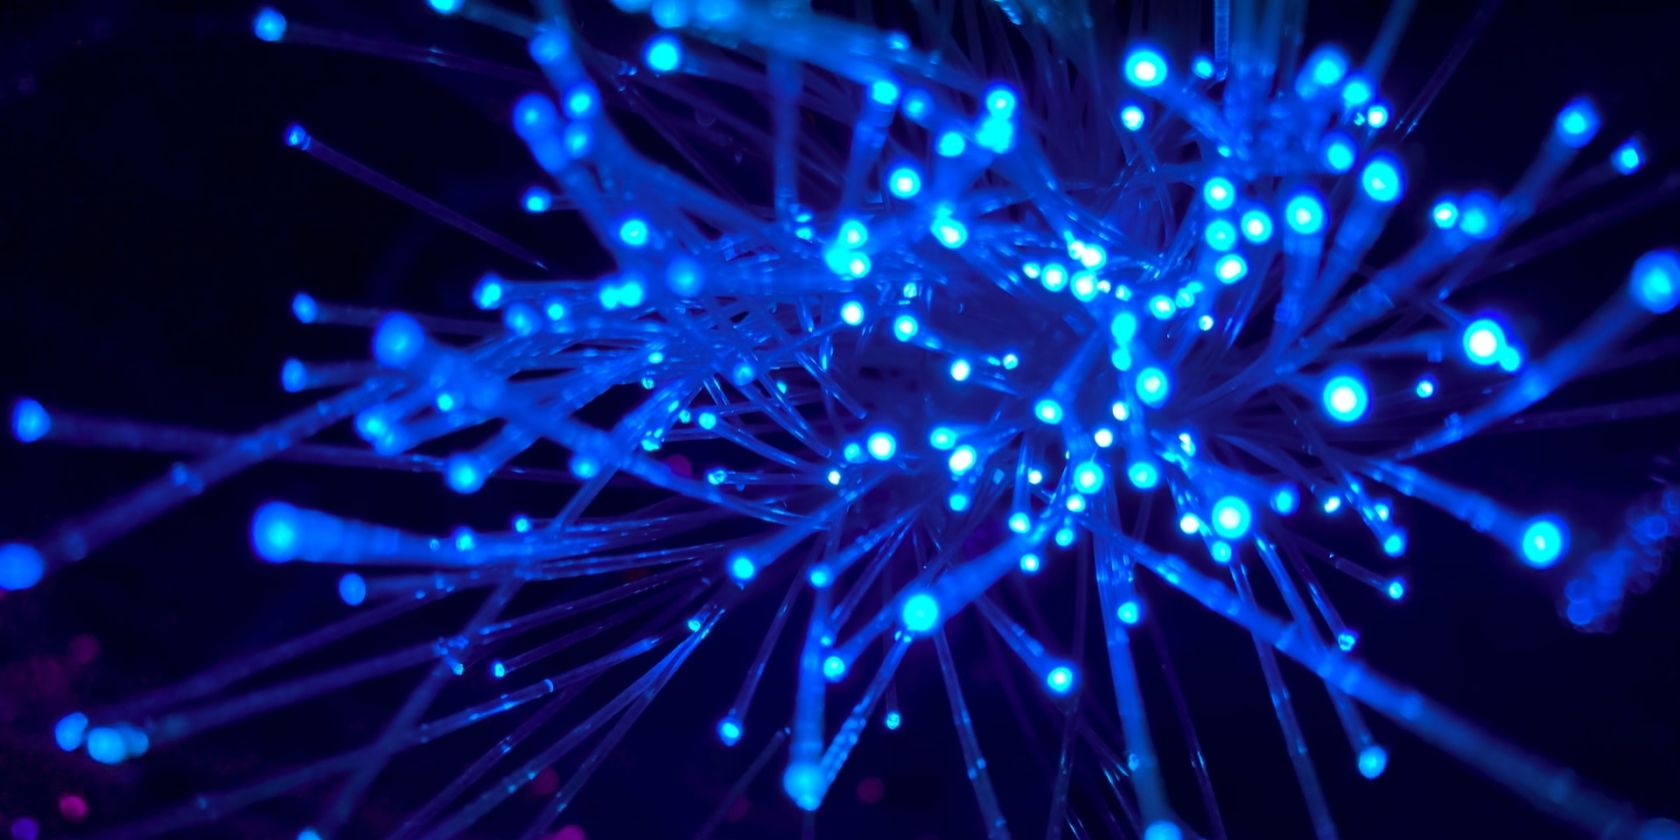 Glowing fiber optic strands